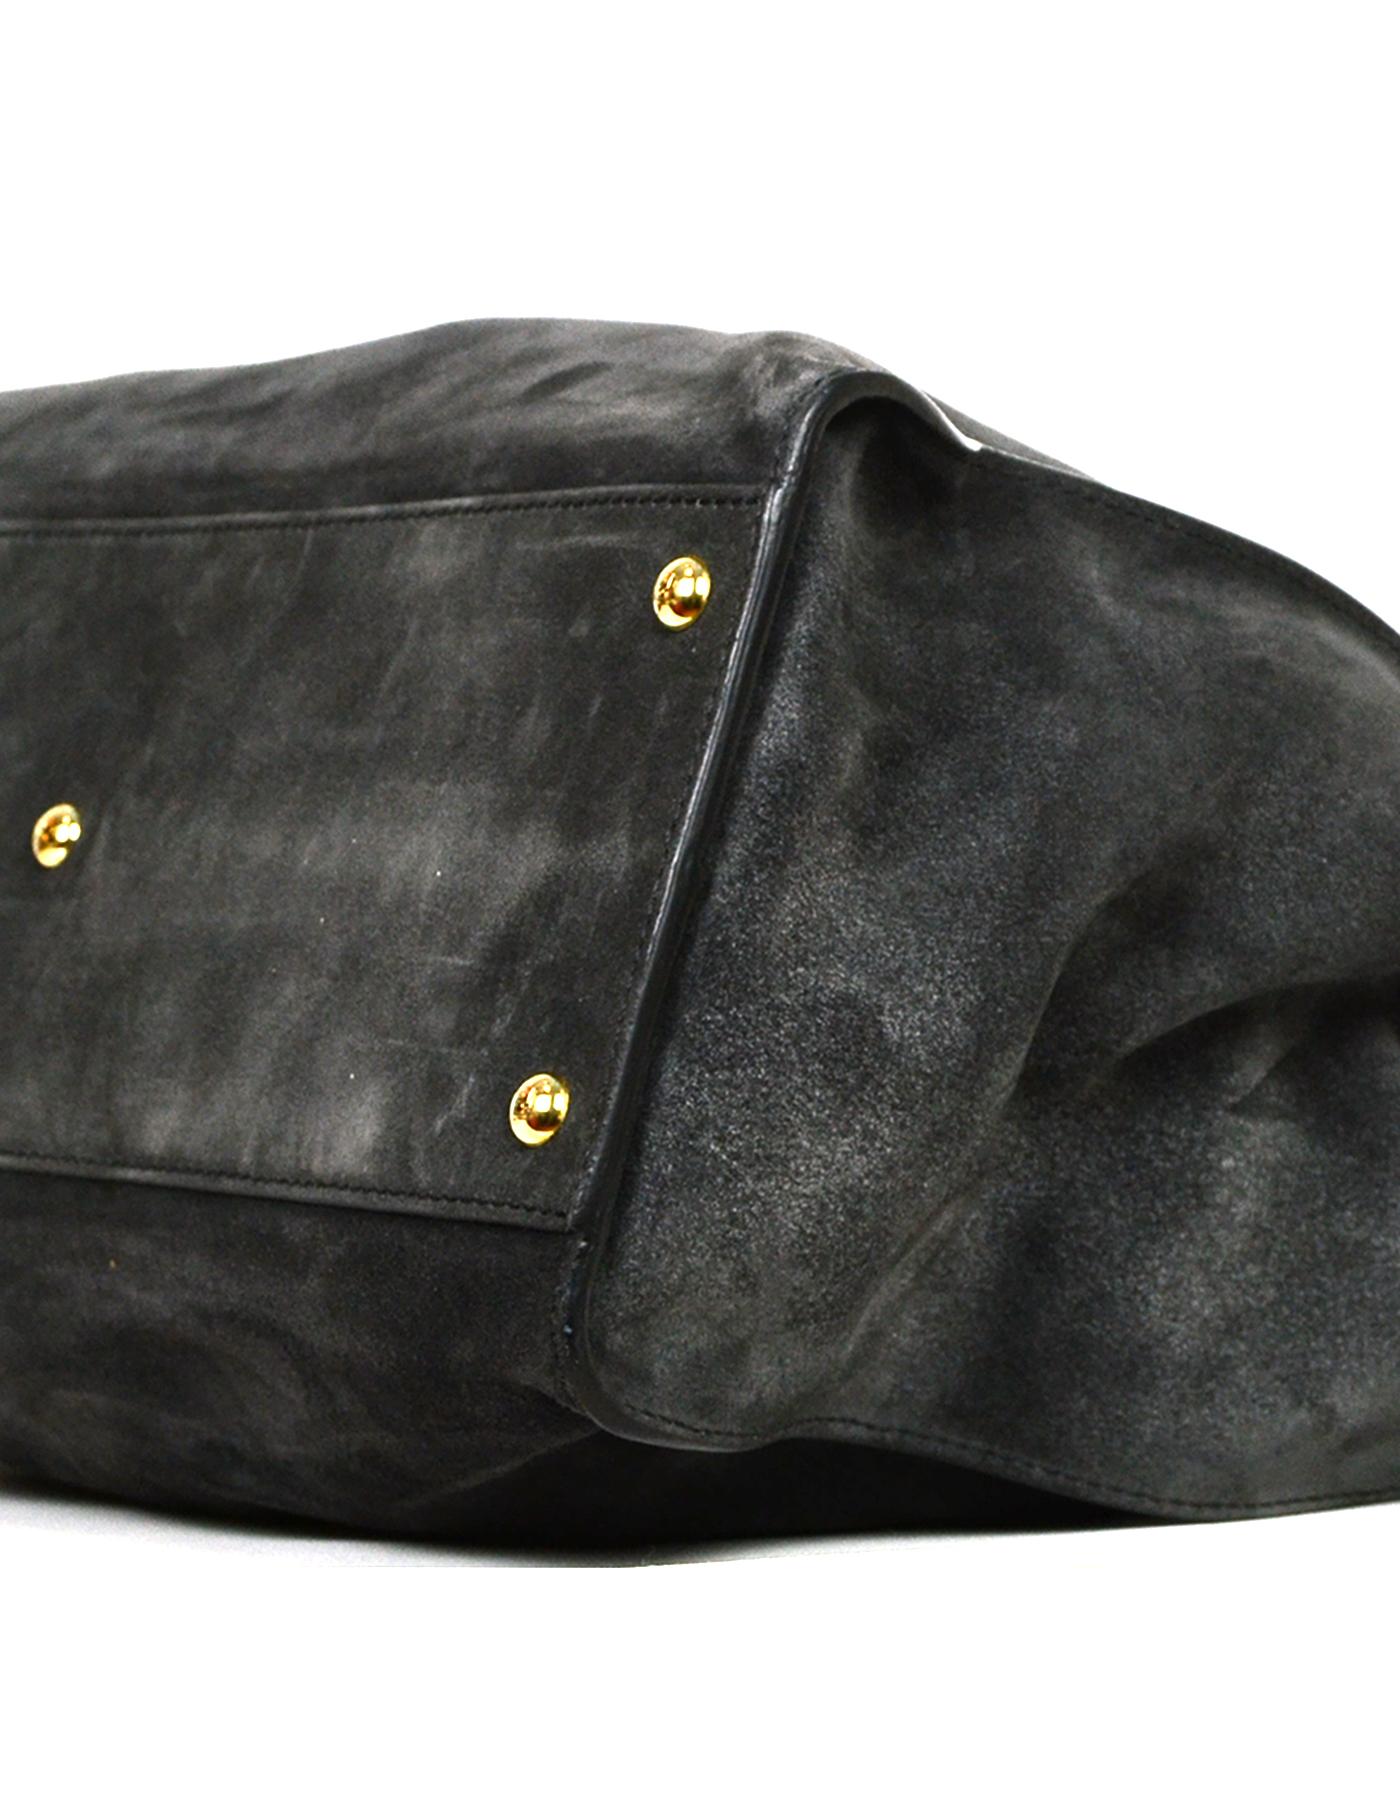 Fendi Grey Suede Large Peekaboo Bag w. Leopard Print Calf Hair Interior rt $4950 1